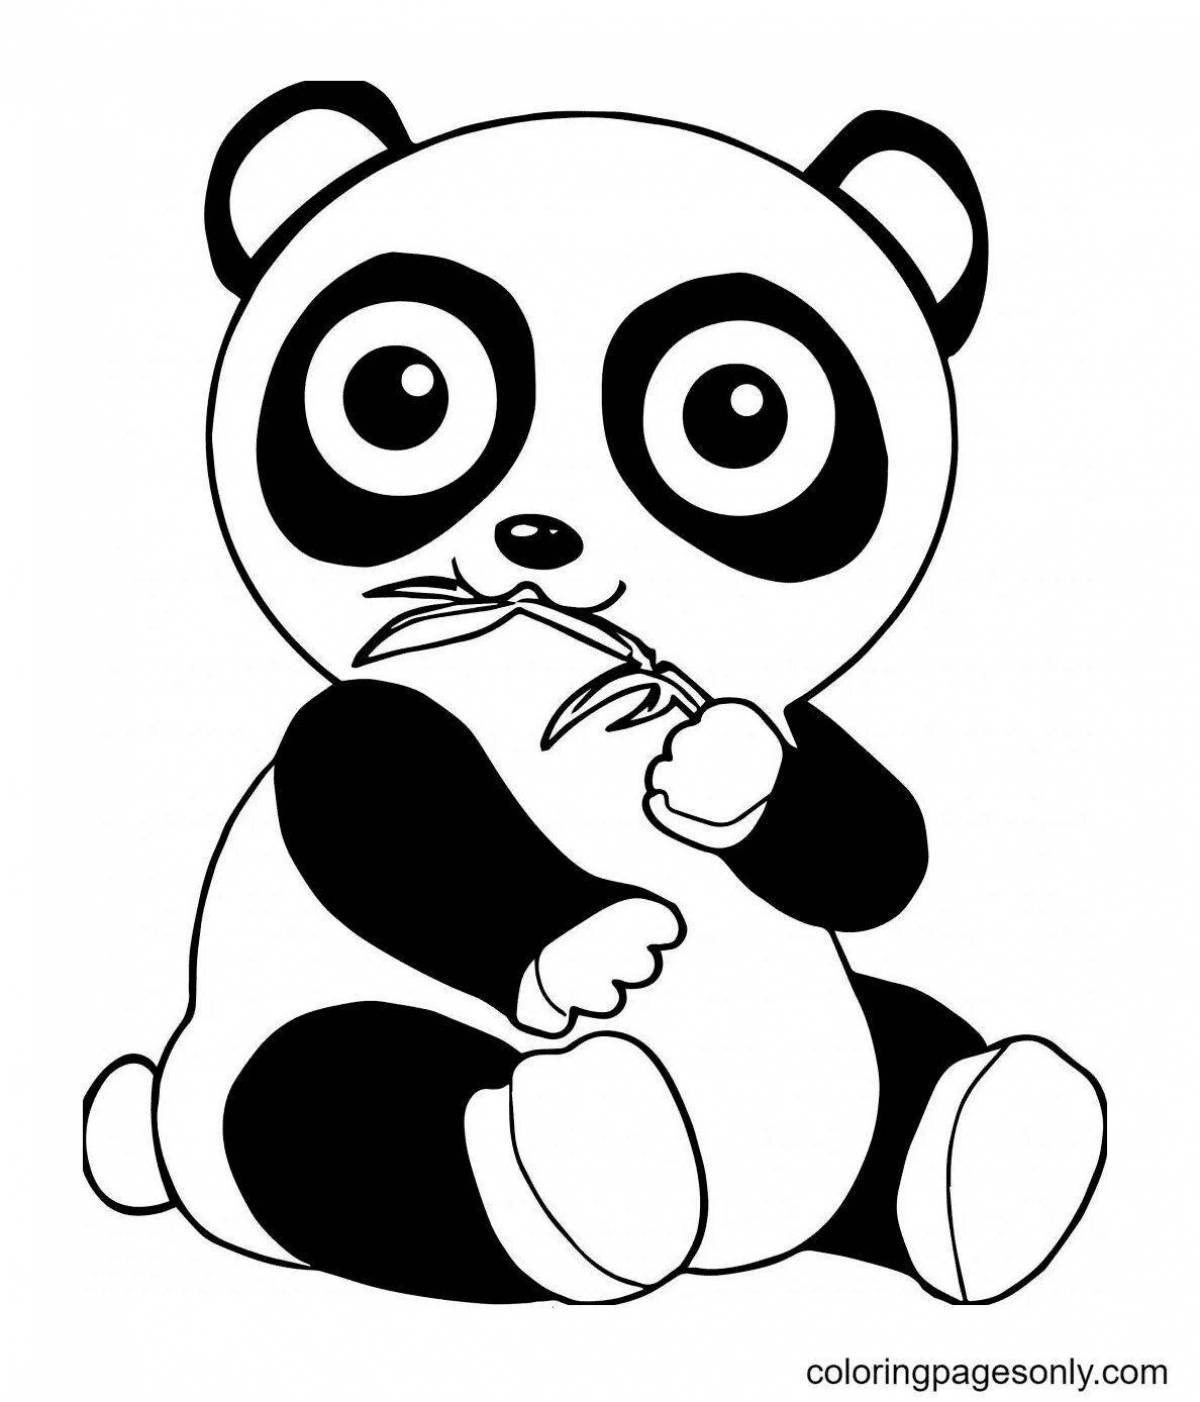 Adorable panda coloring book with bamboo